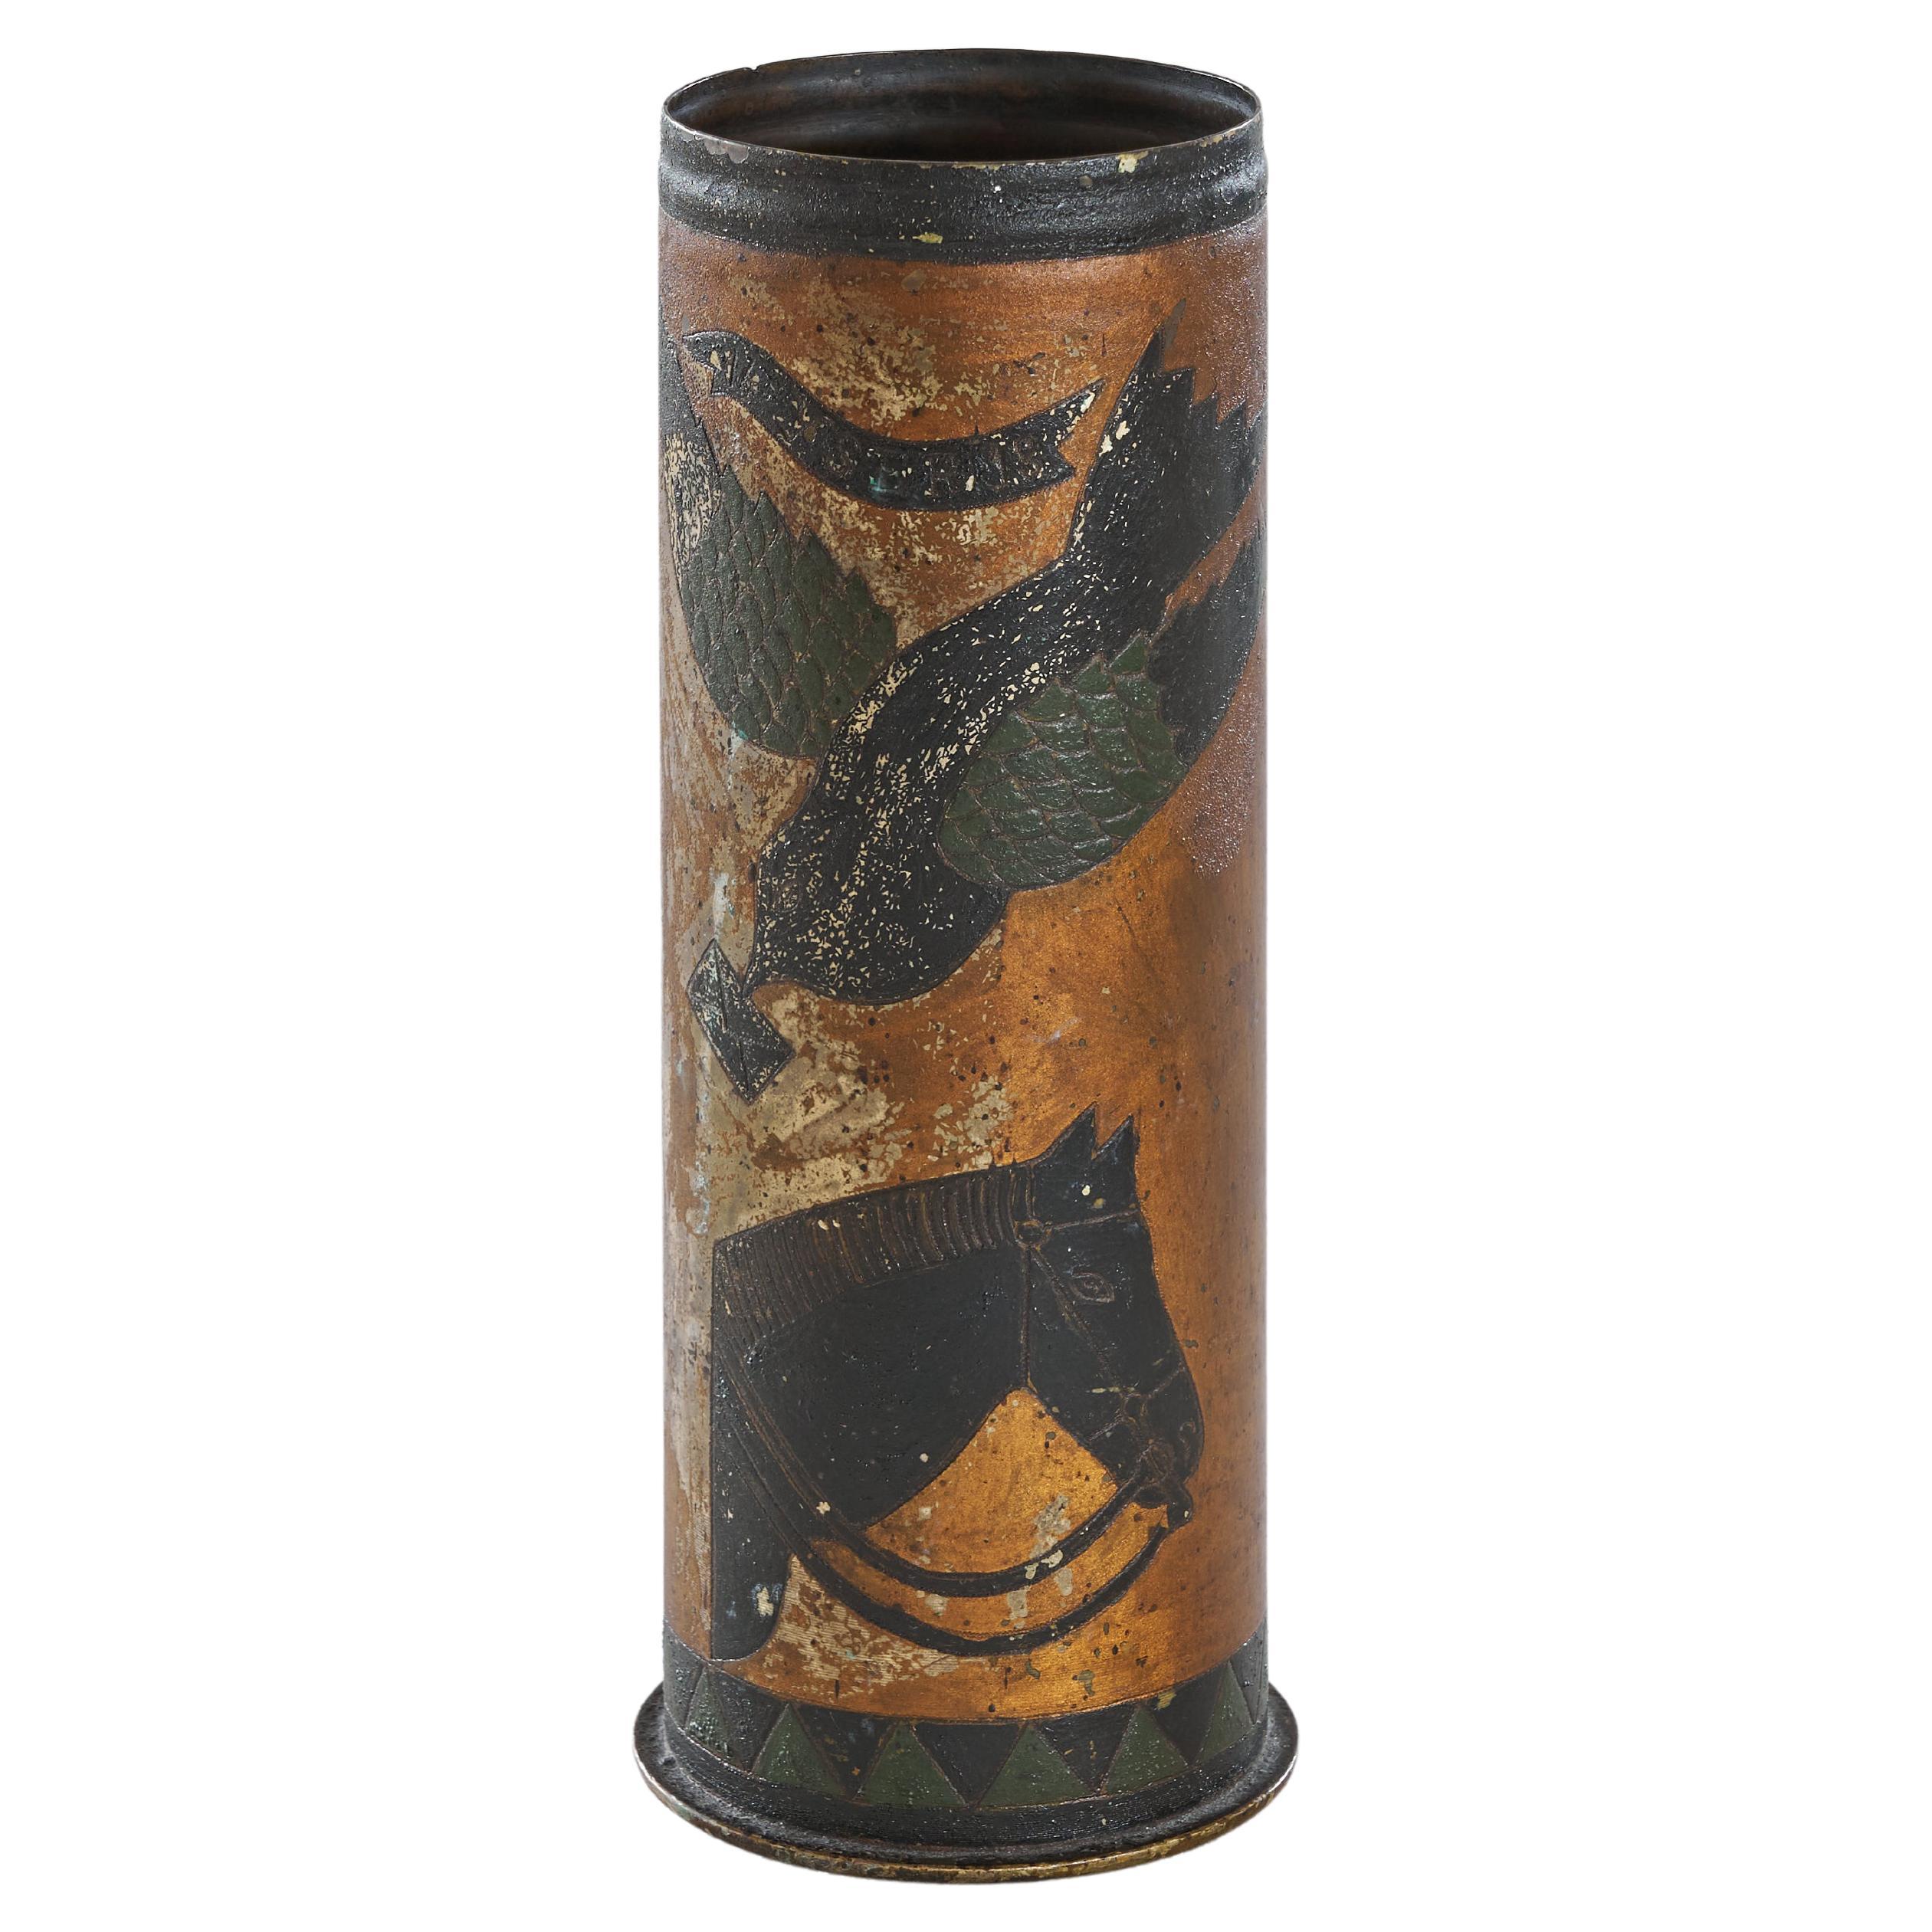 Highly Decorative WWI Bombshell Trench Art Vase